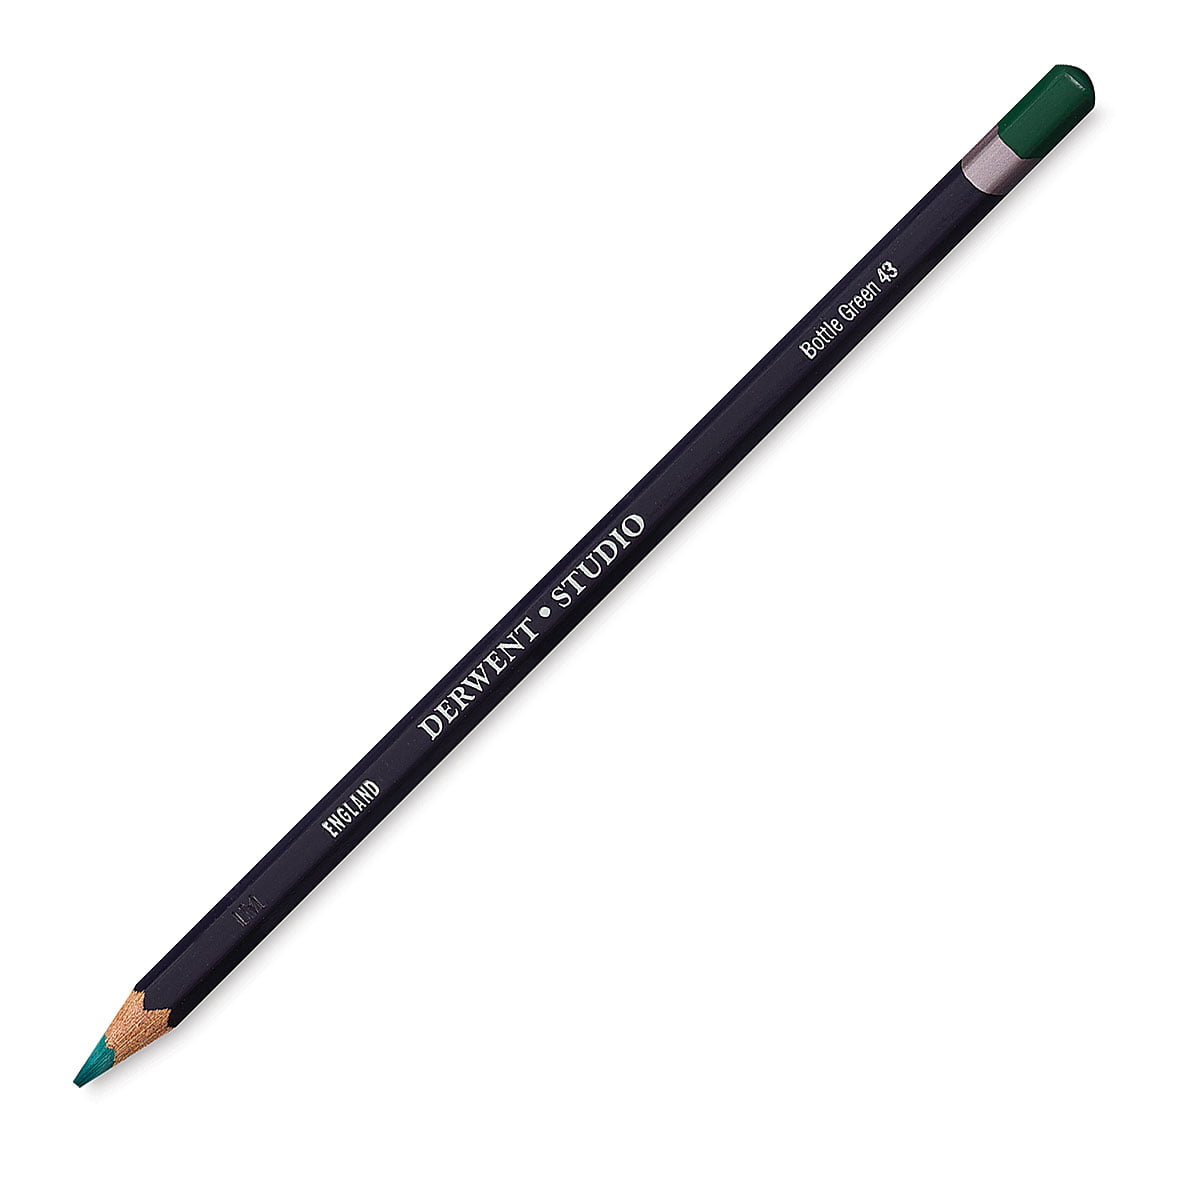 Shuttle Art 136 Colored Pencils,Colored Pencil Set for Adult